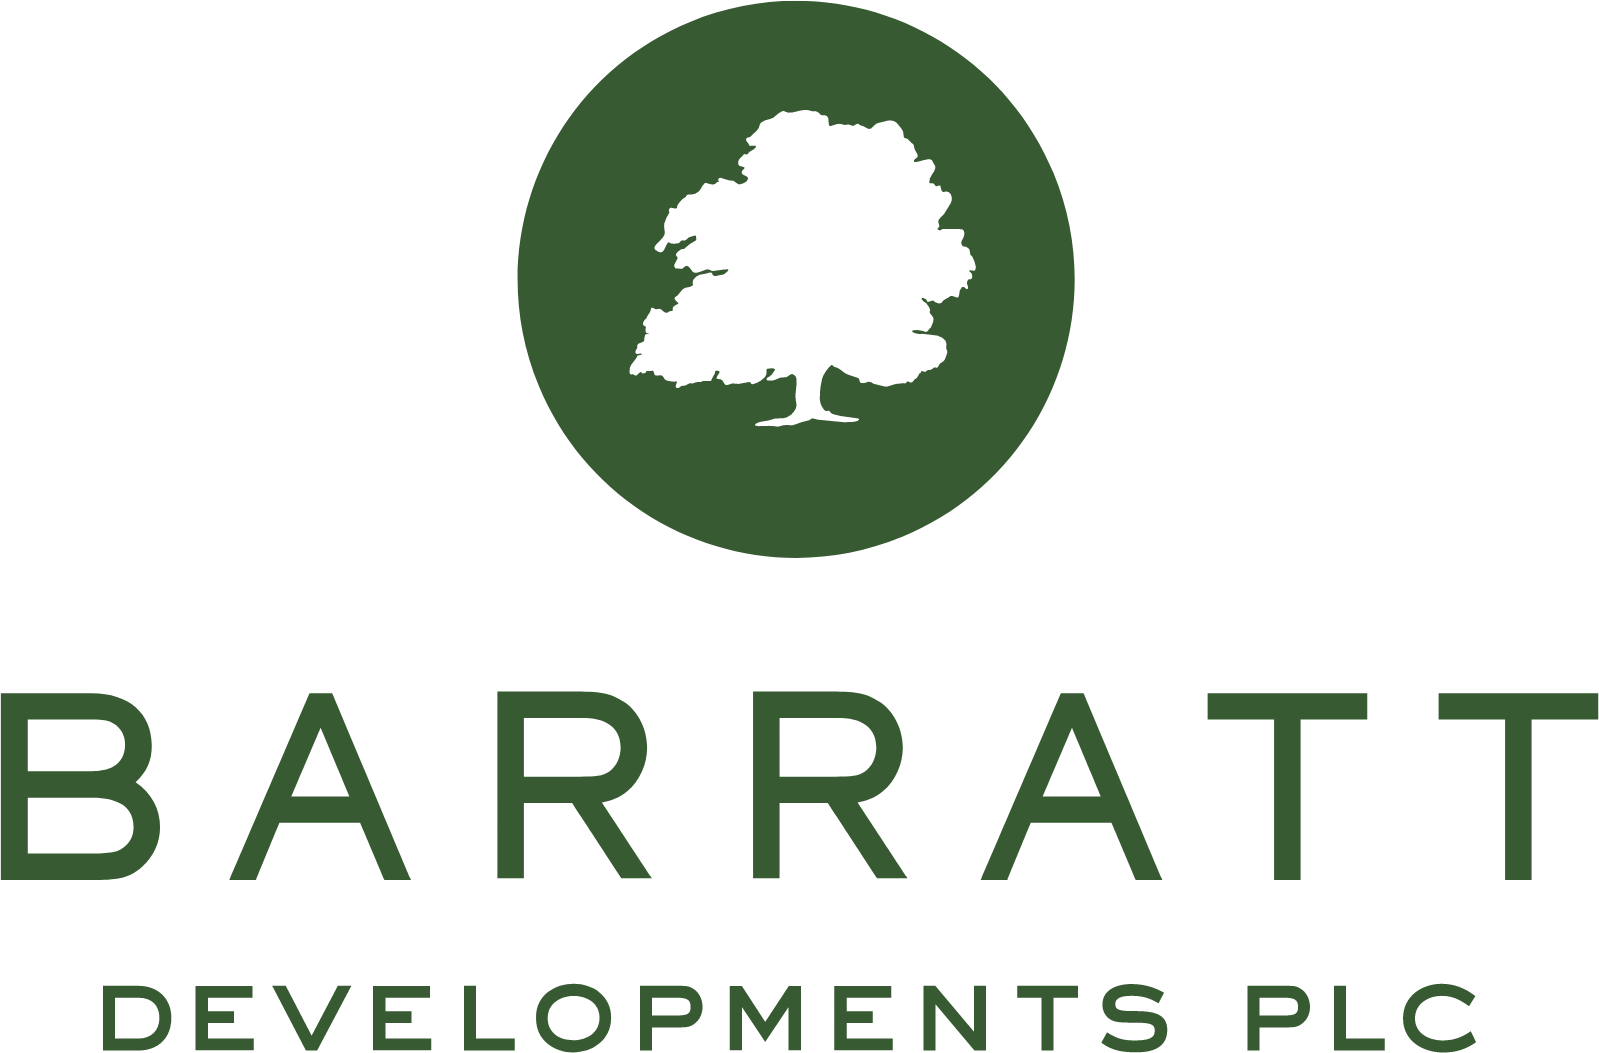 Barratt Developments logo large (transparent PNG)